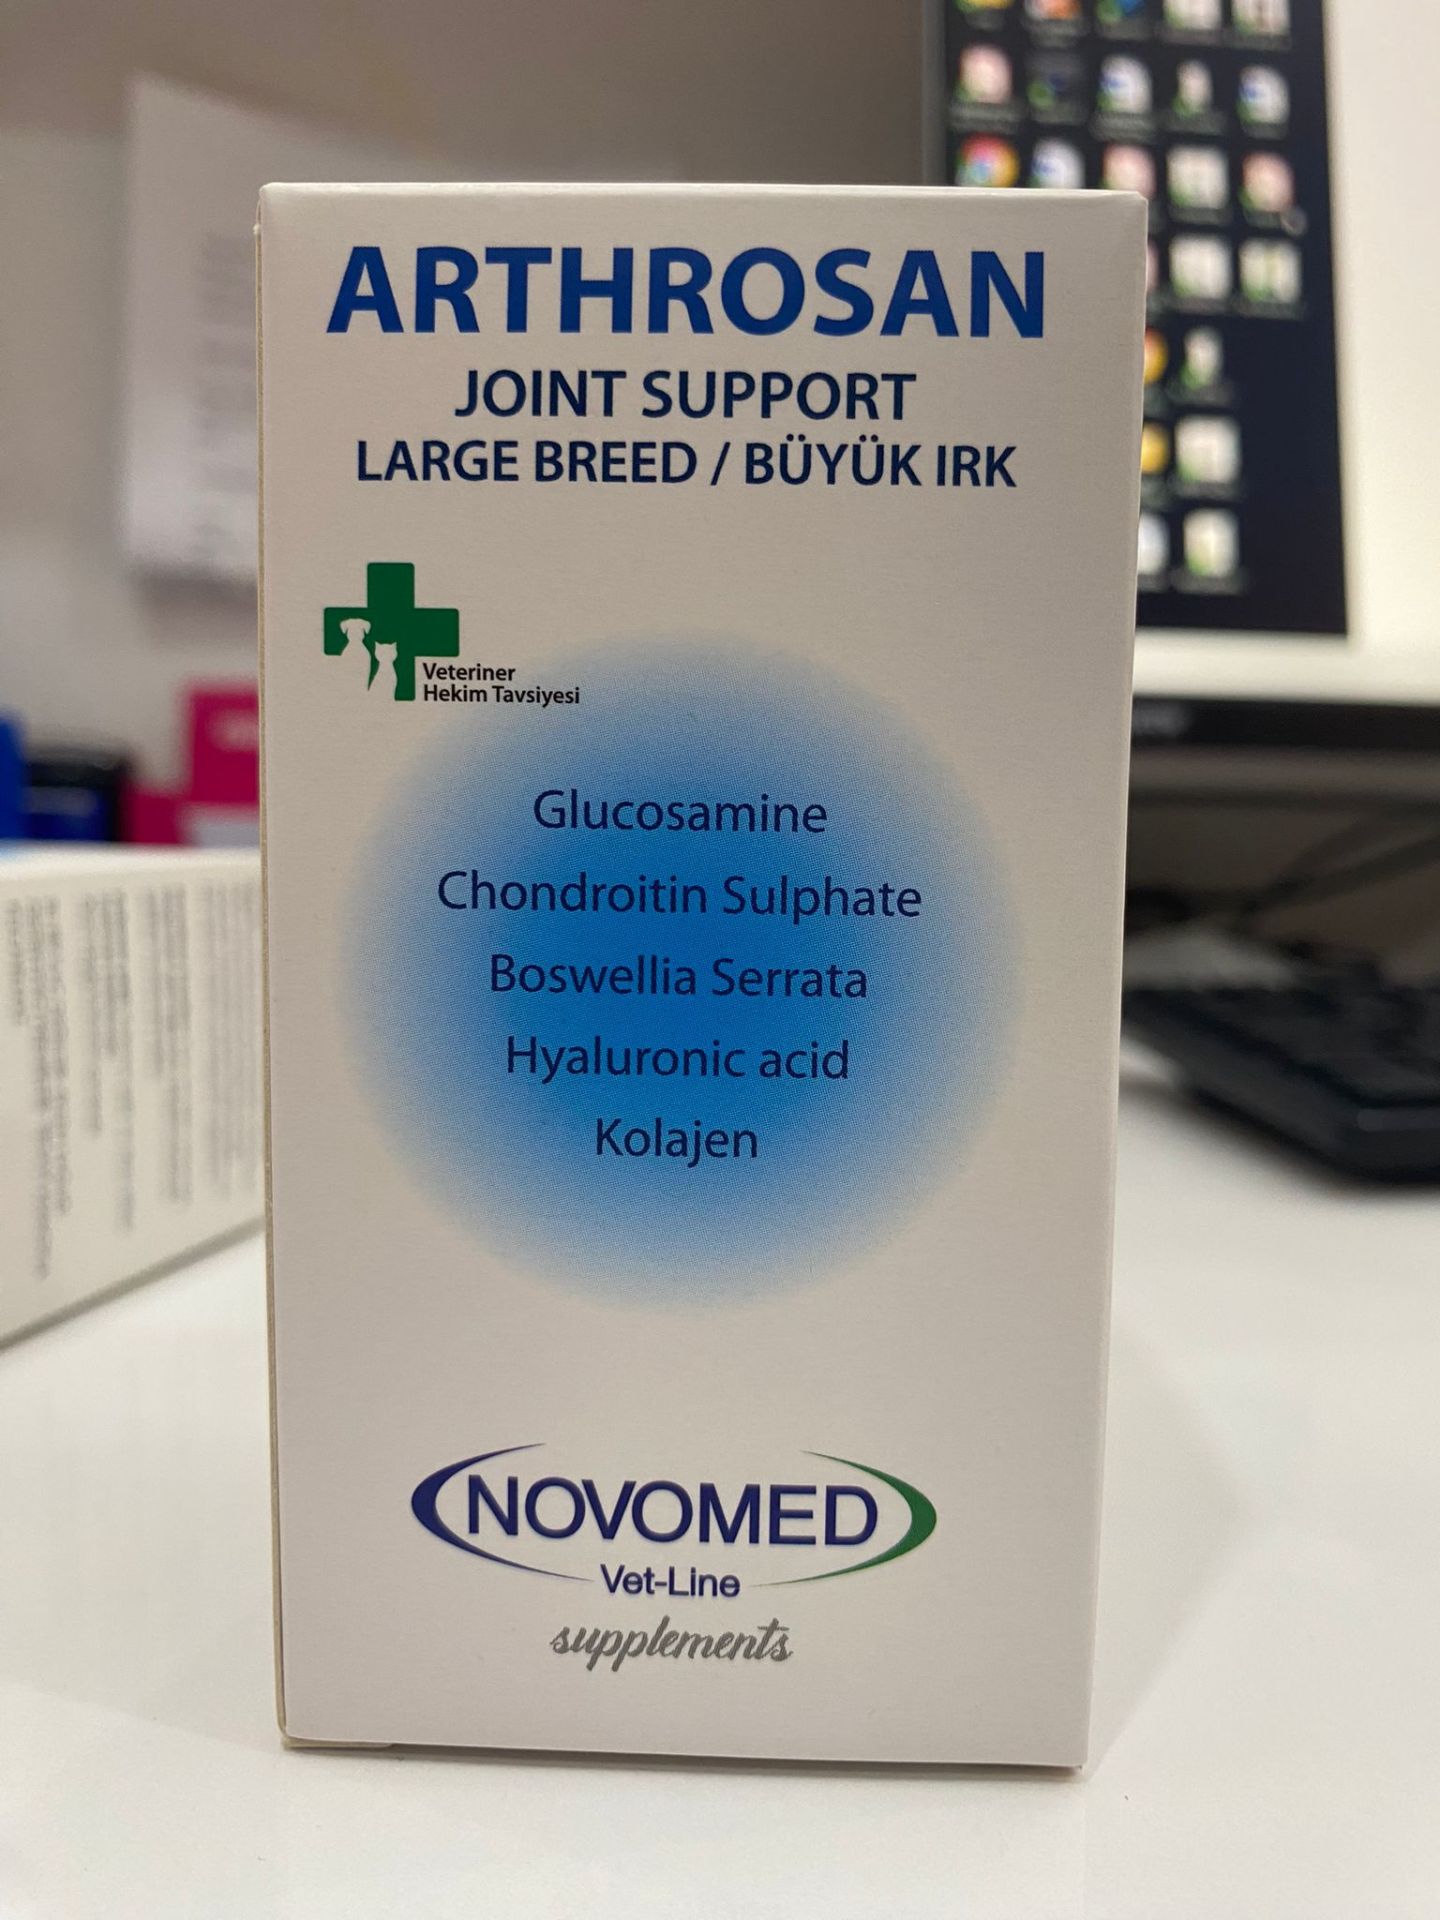 Novomed Arthrosan Joint Support / Büyük Irk tablet